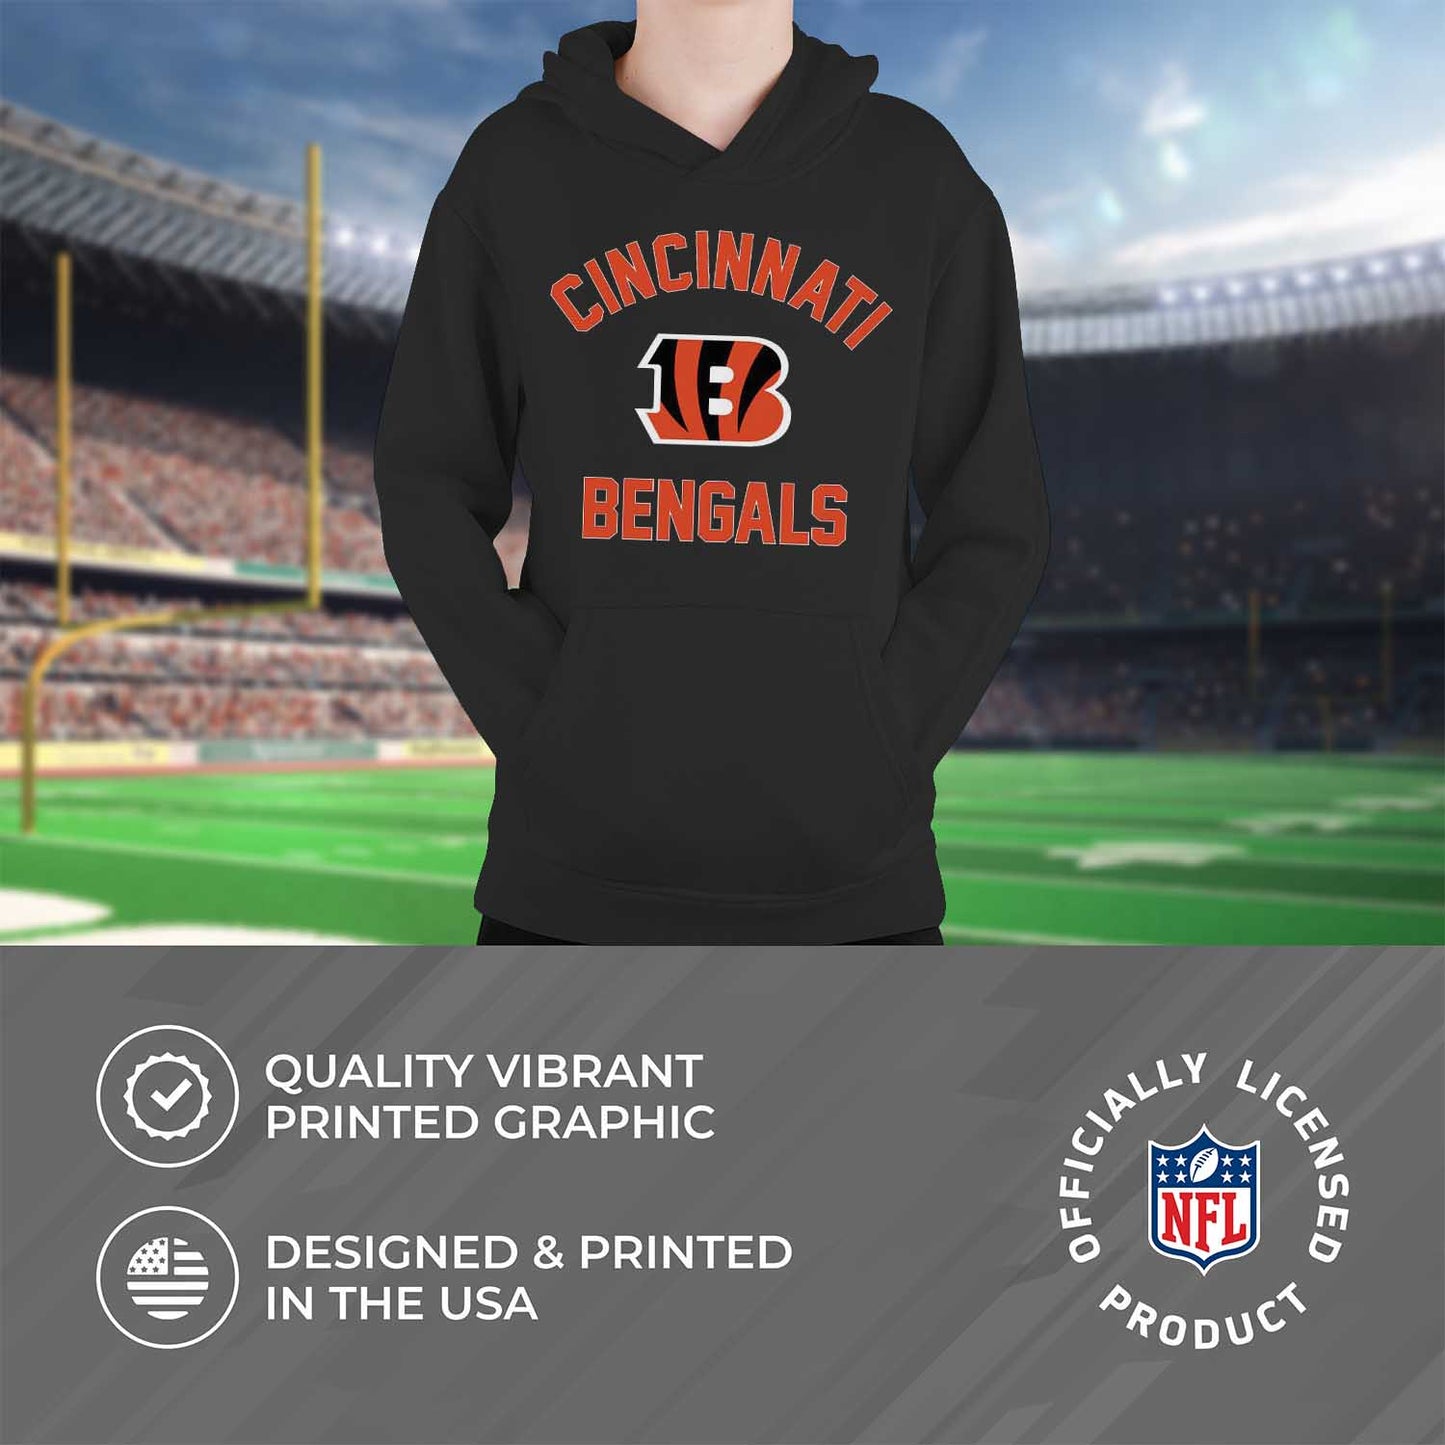 Cincinnati Bengals NFL Youth Gameday Hooded Sweatshirt - Black